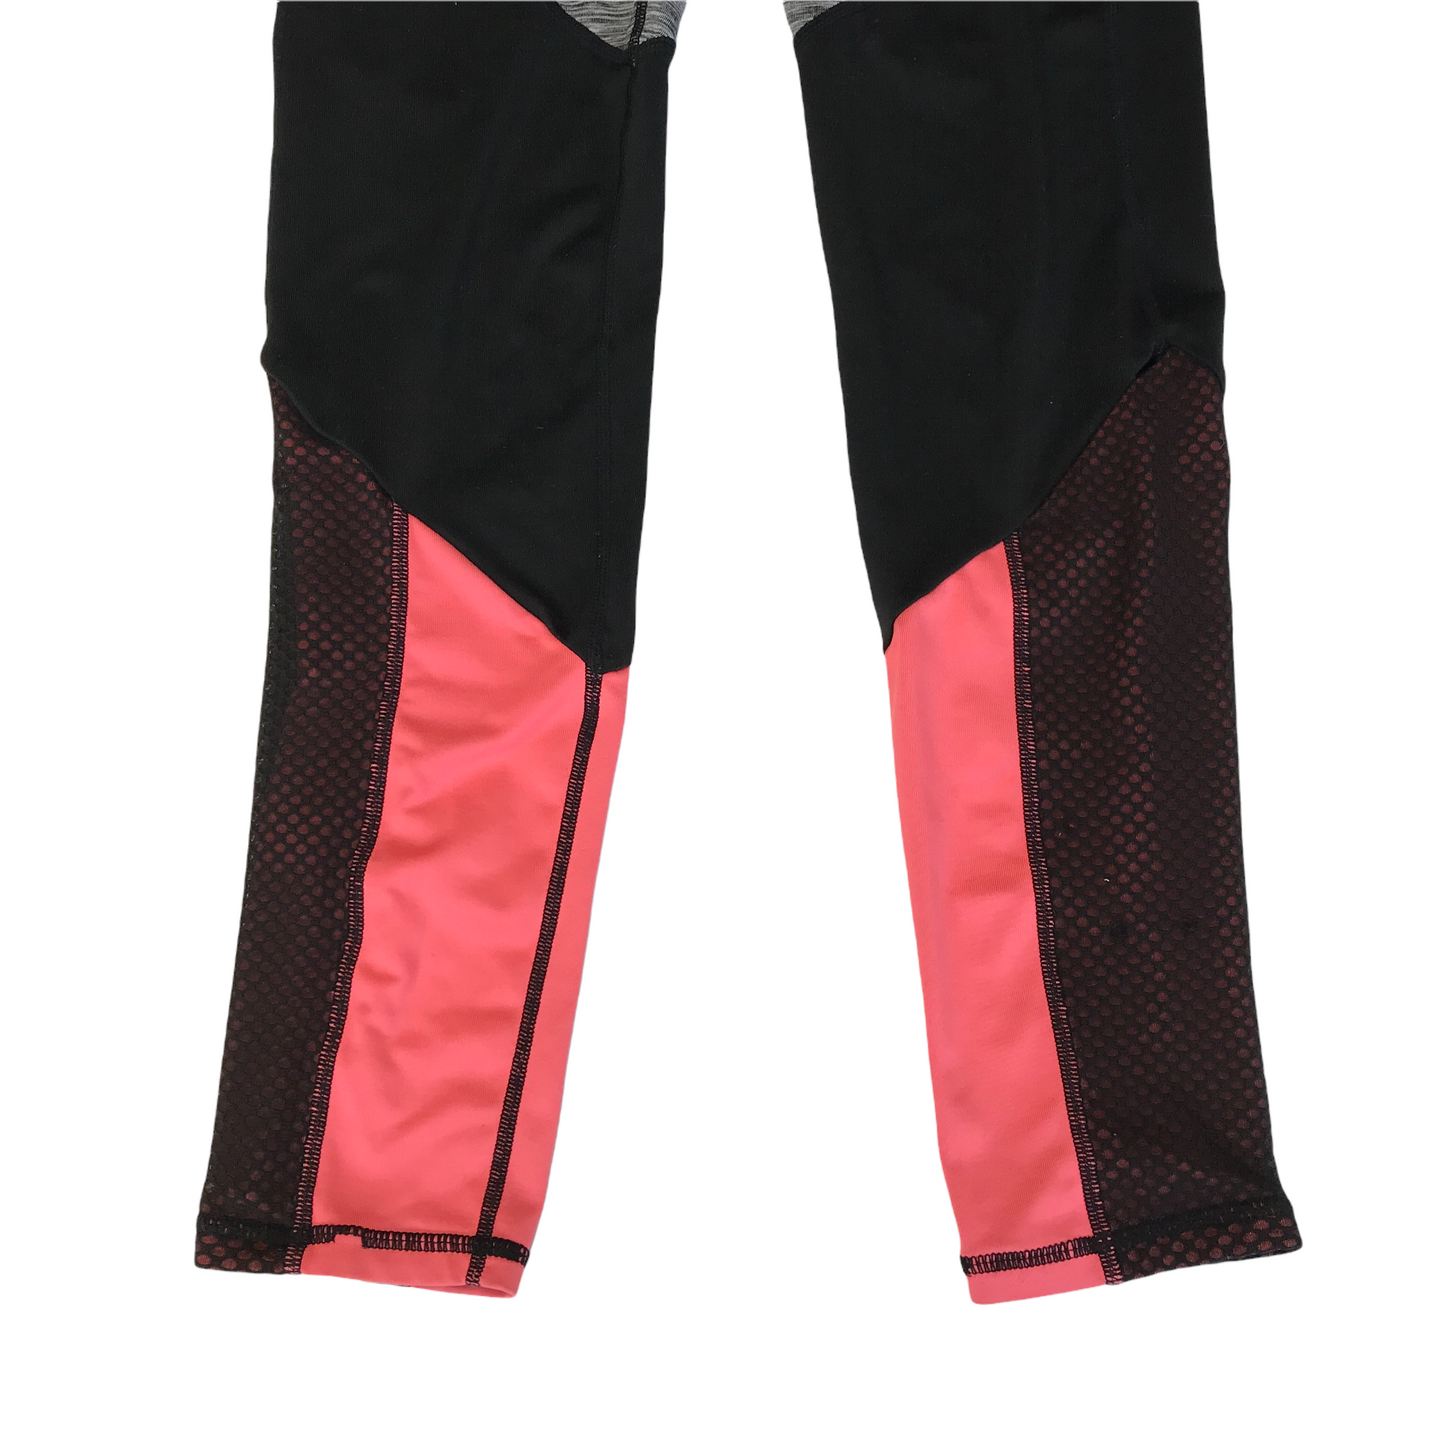 H&M Grey Black and Pink Sport Leggings Age 10